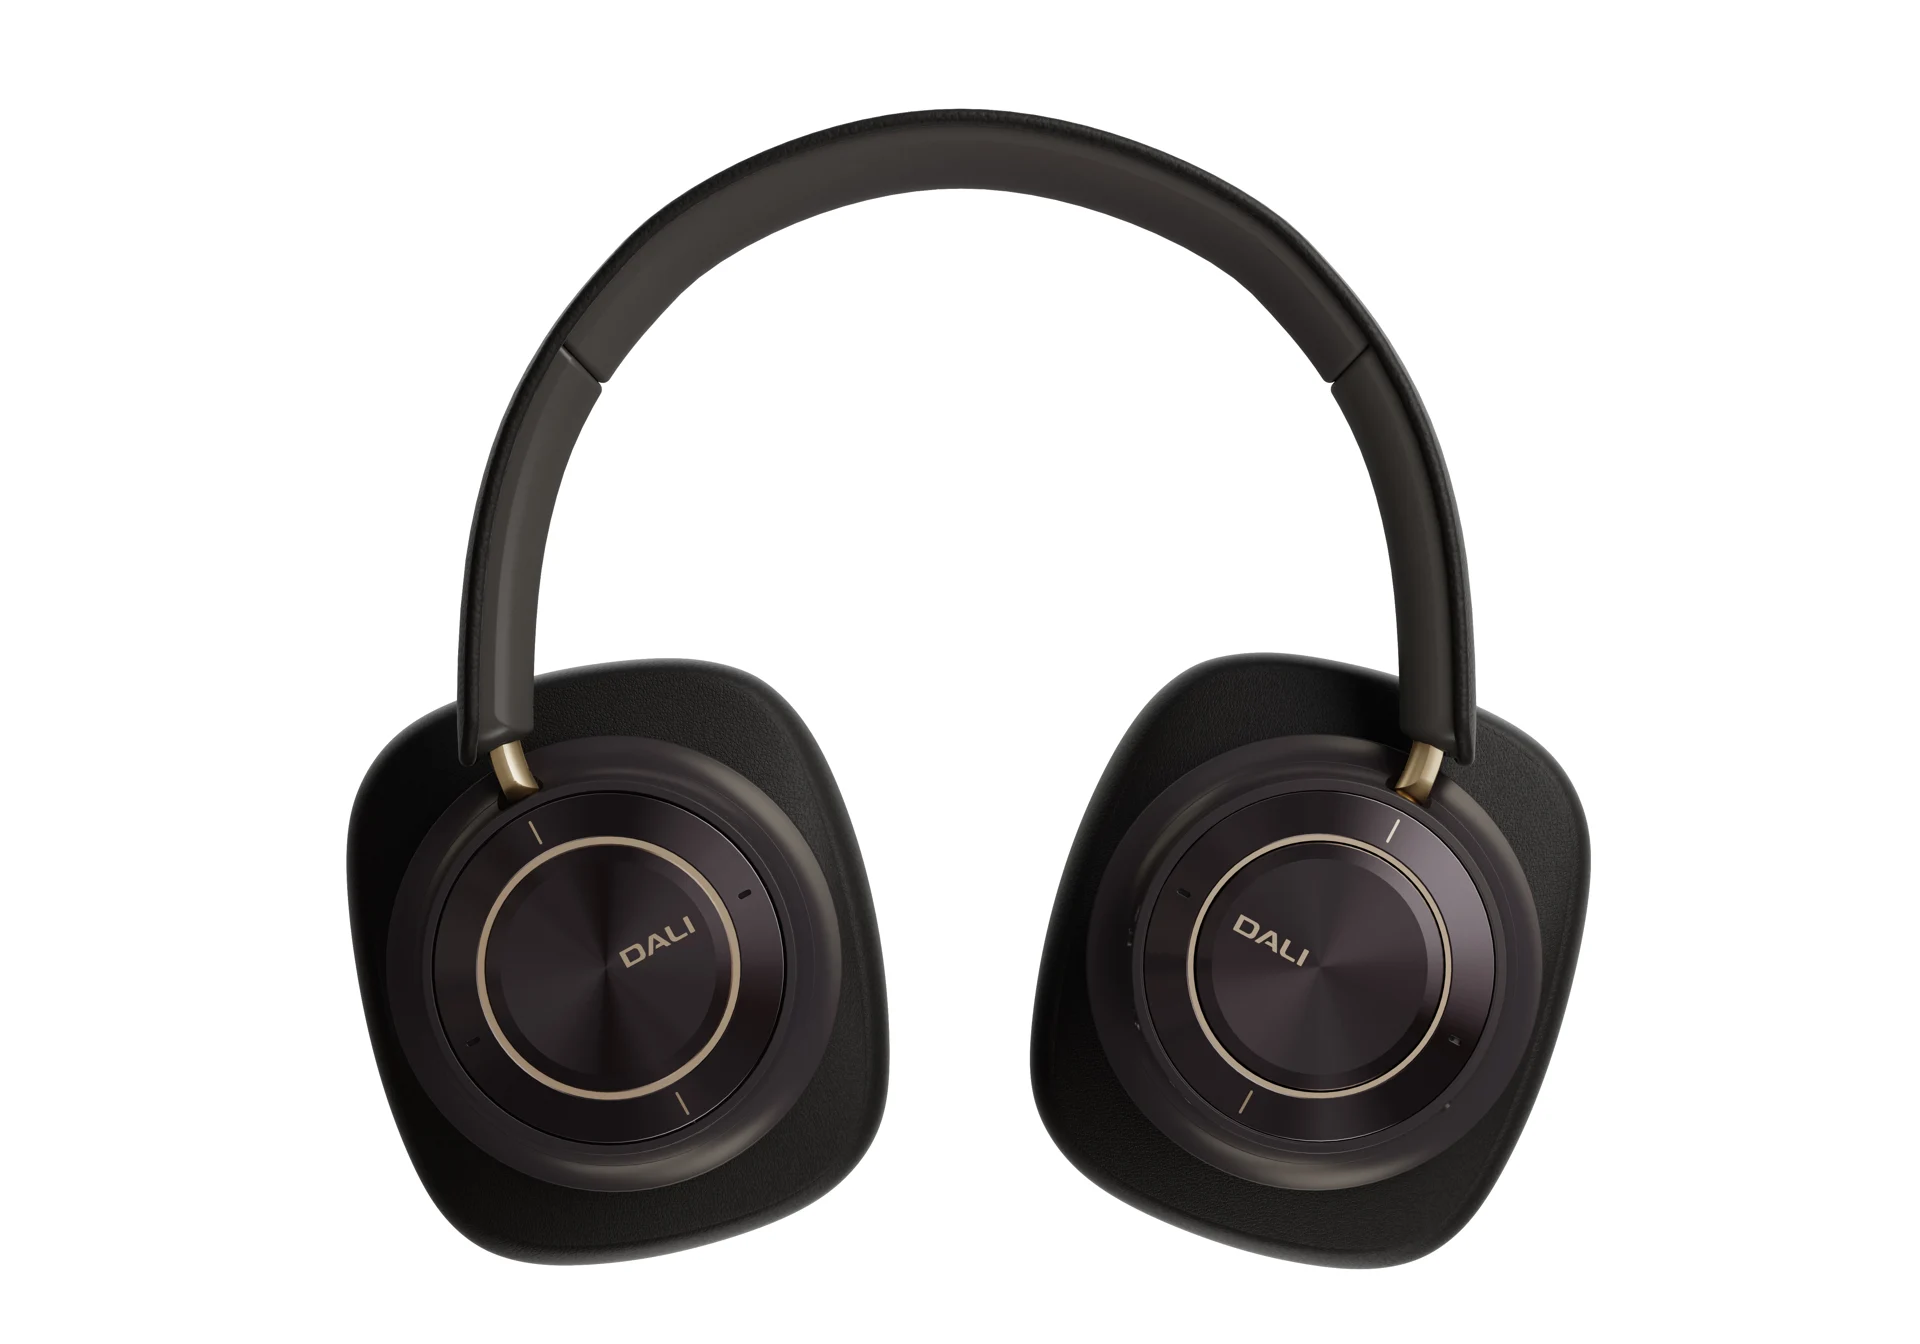 Dali says its latest headphones achieve electrostatic levels of clarity